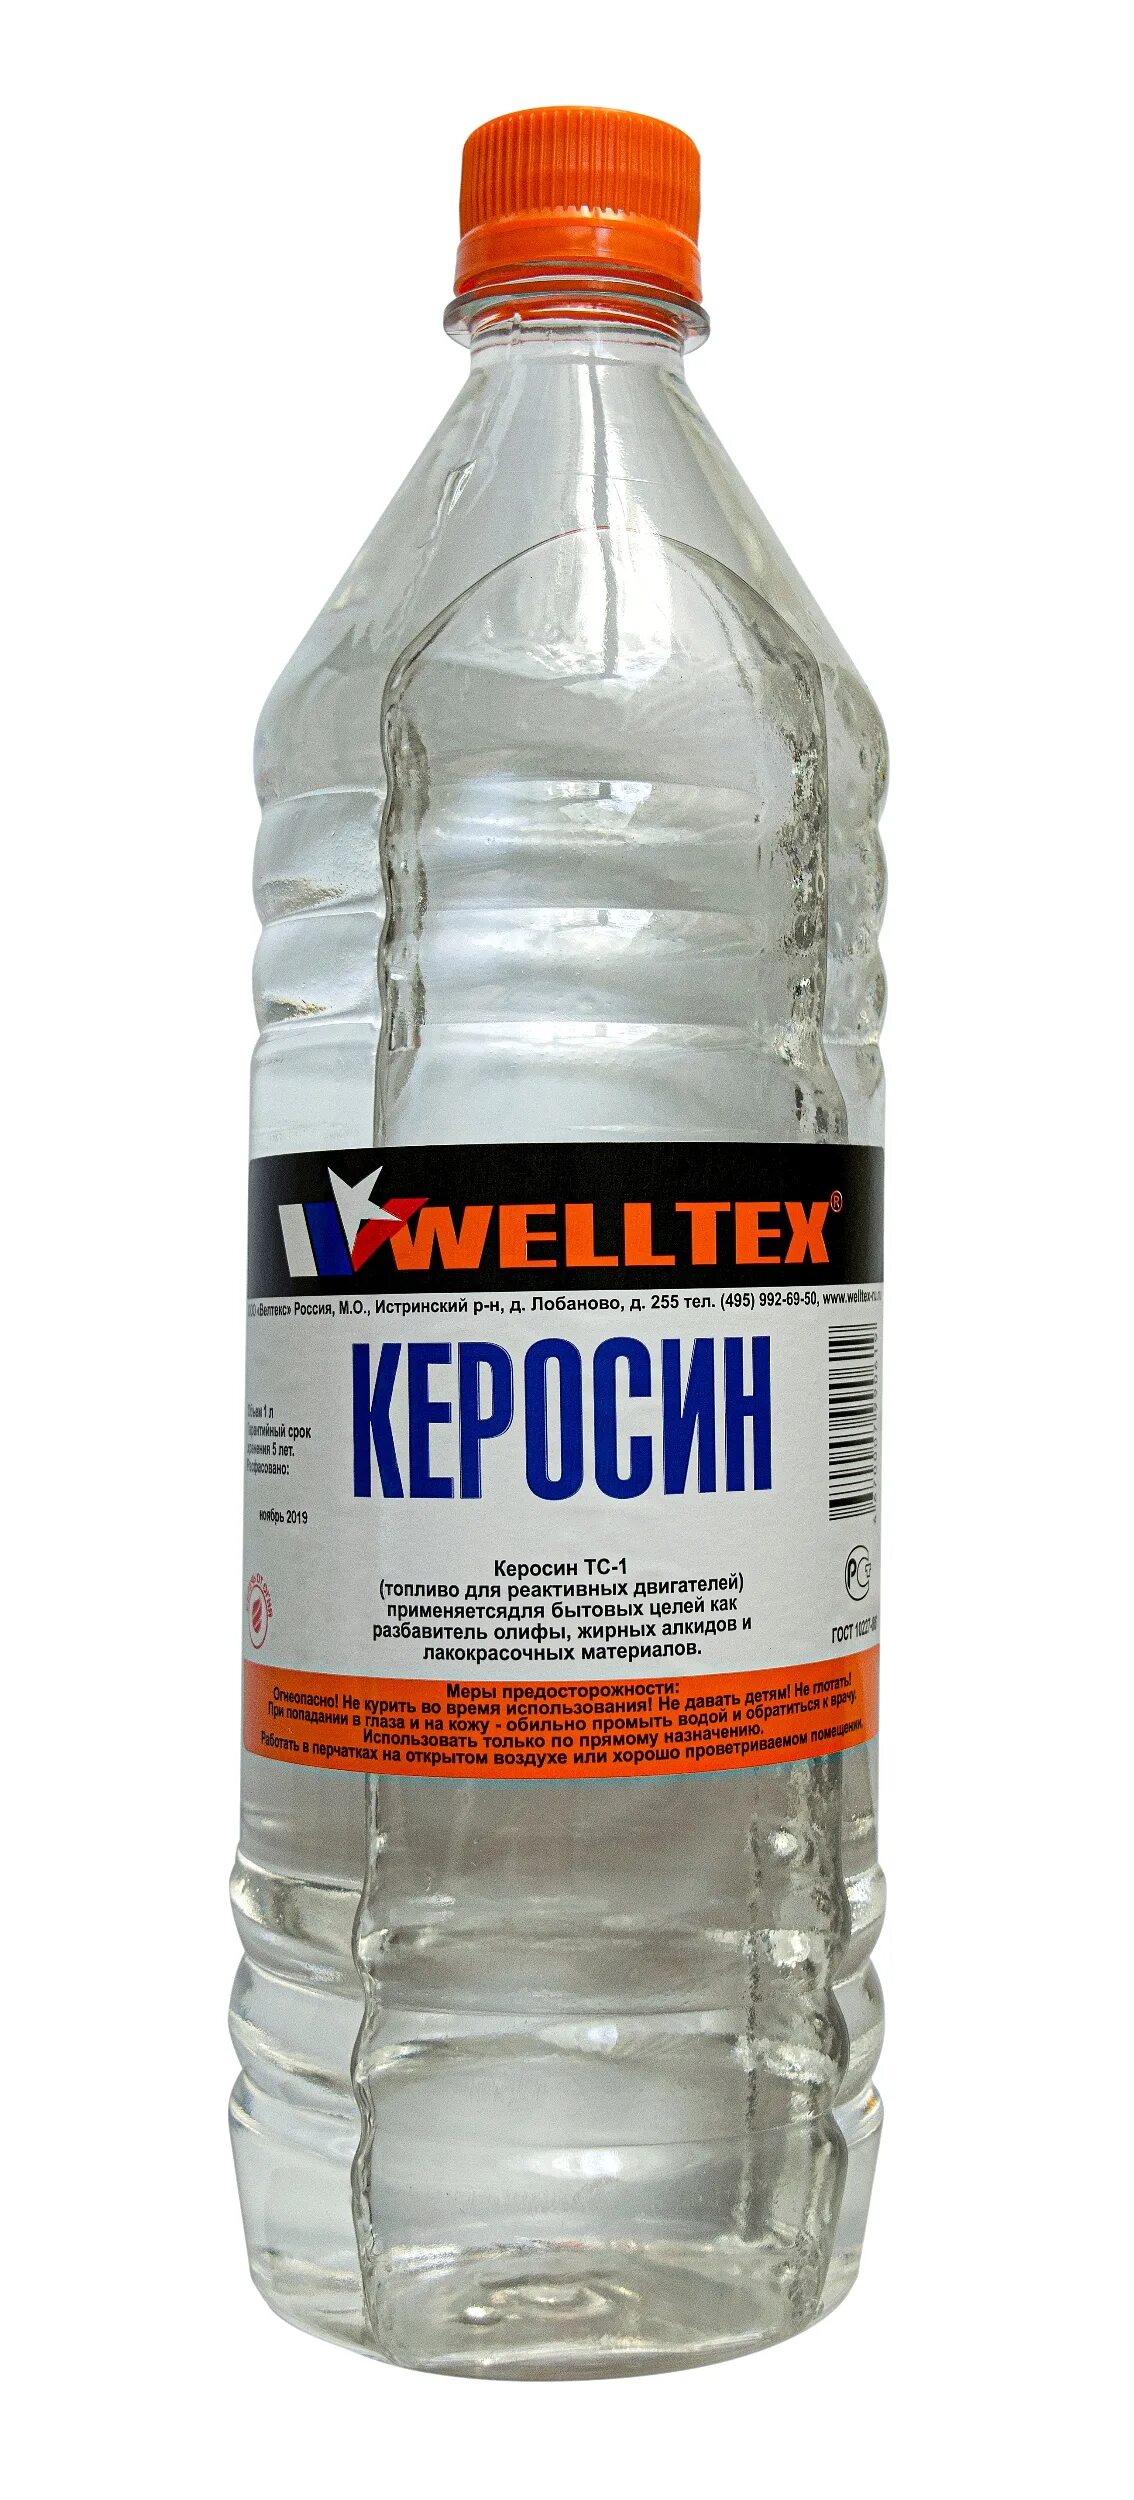 Welltex керосин (1л.). Керосин 1л Welltex Welltex 4670007990619. Сольвент Welltex нефтяной 1 л. Керосин ТС-1 ГОСТ. Керосин газ